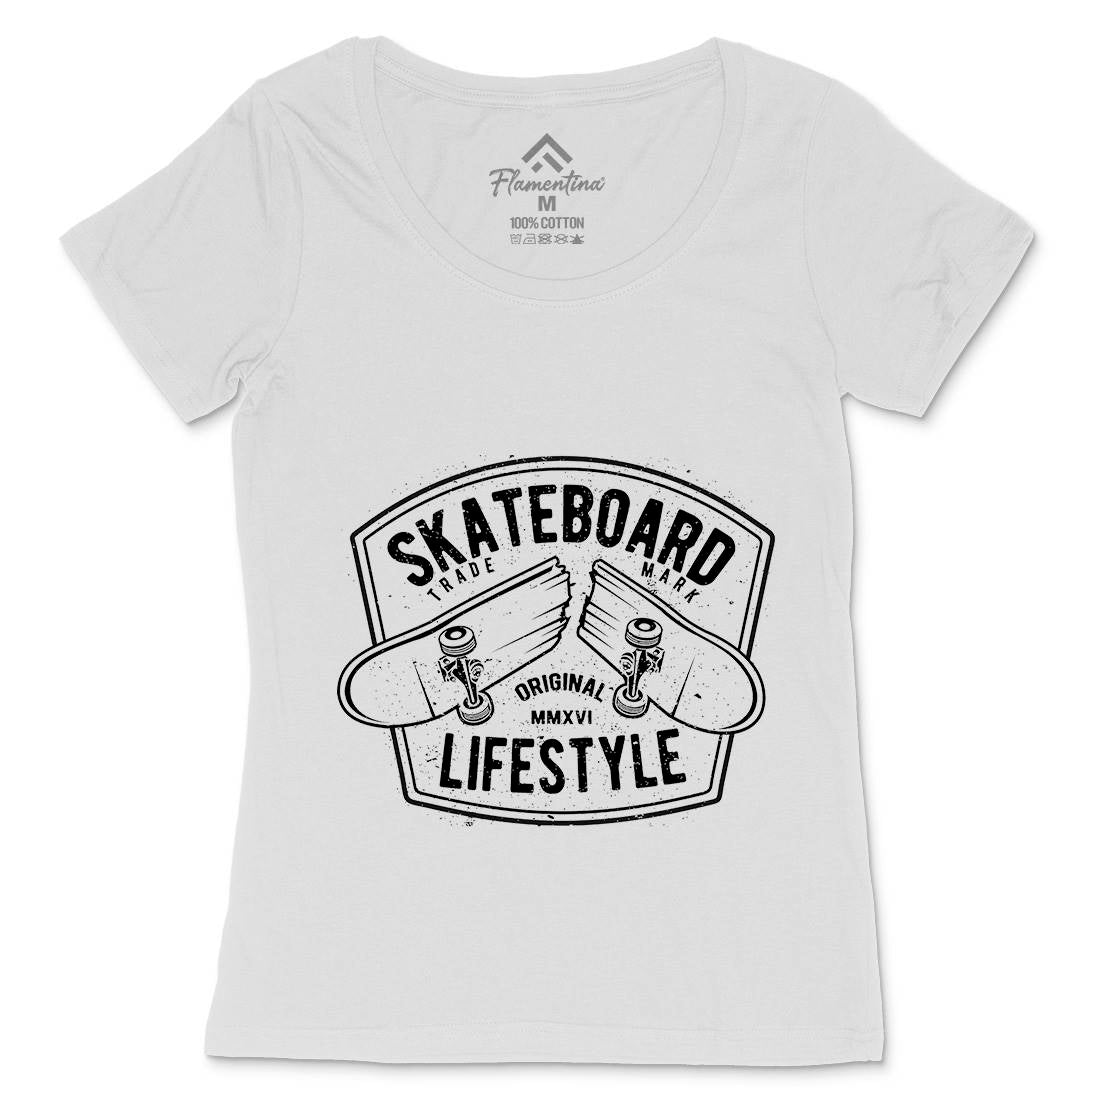 Skateboard Lifestyle Womens Scoop Neck T-Shirt Skate A145